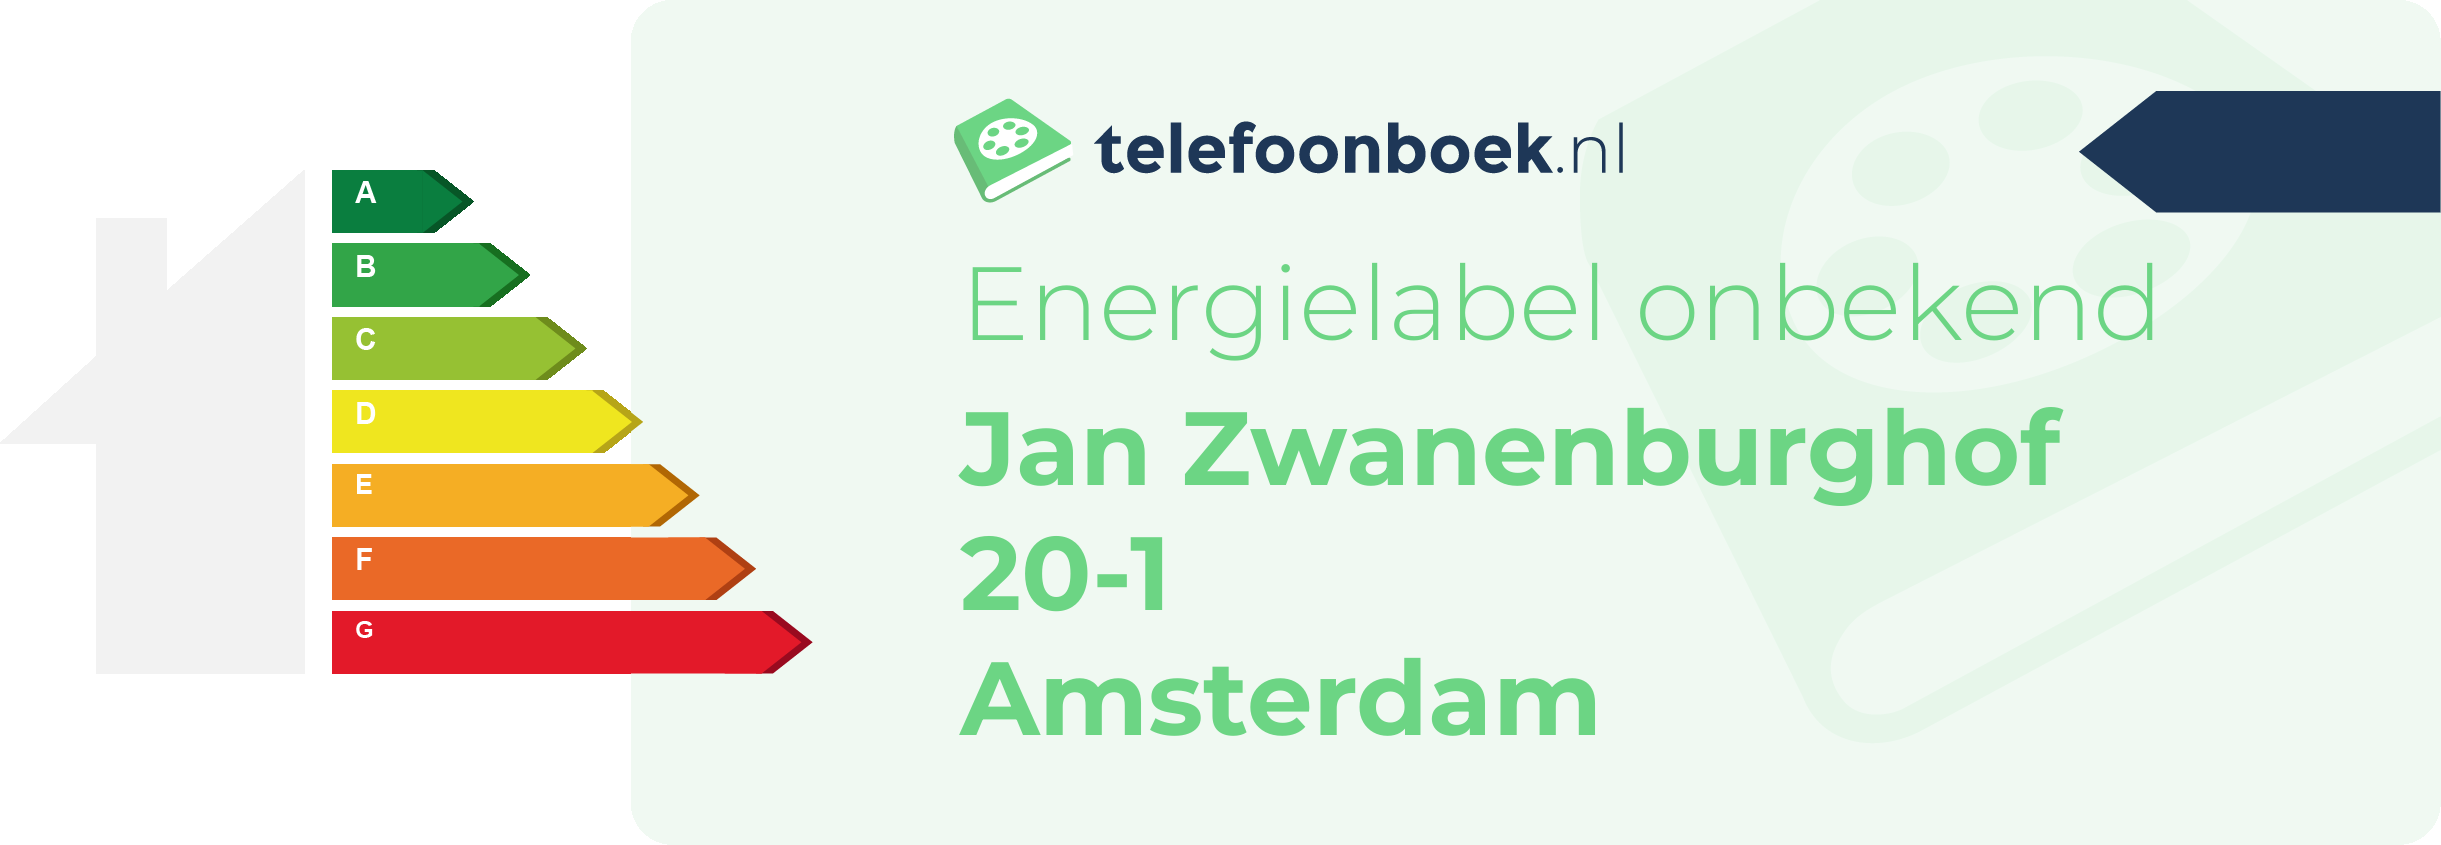 Energielabel Jan Zwanenburghof 20-1 Amsterdam